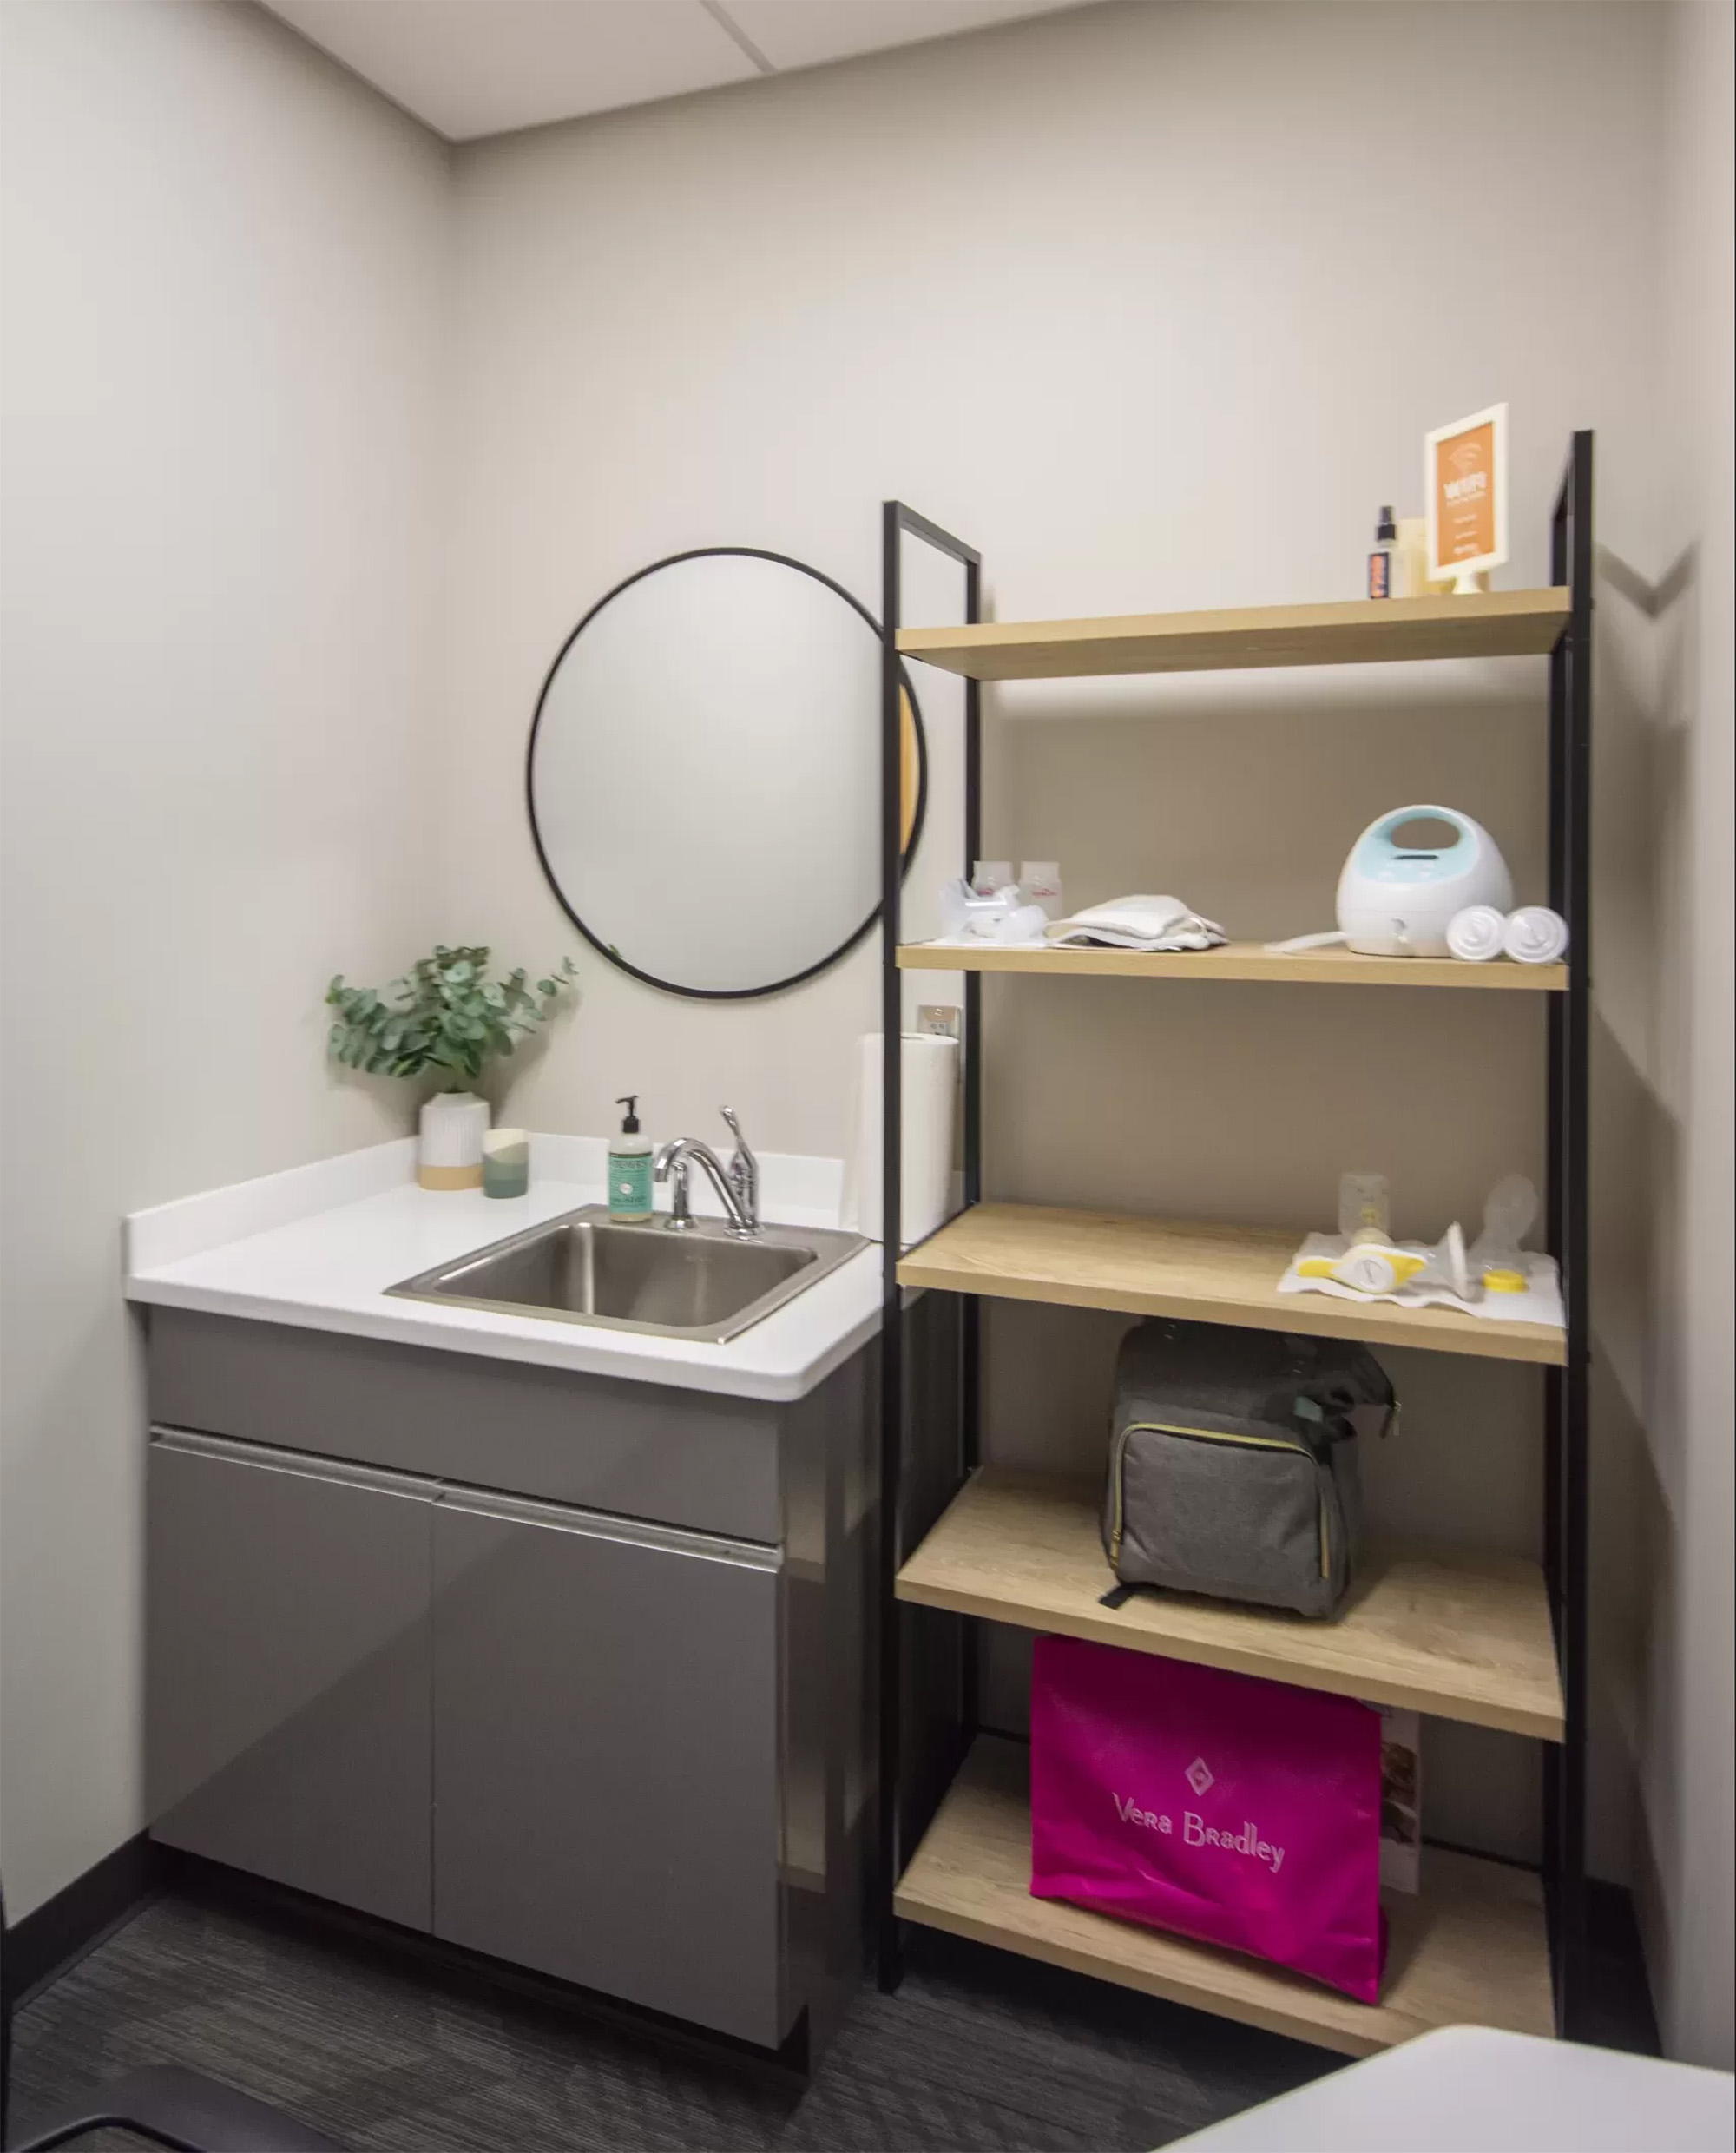 Design Collaborative mother's room amenities